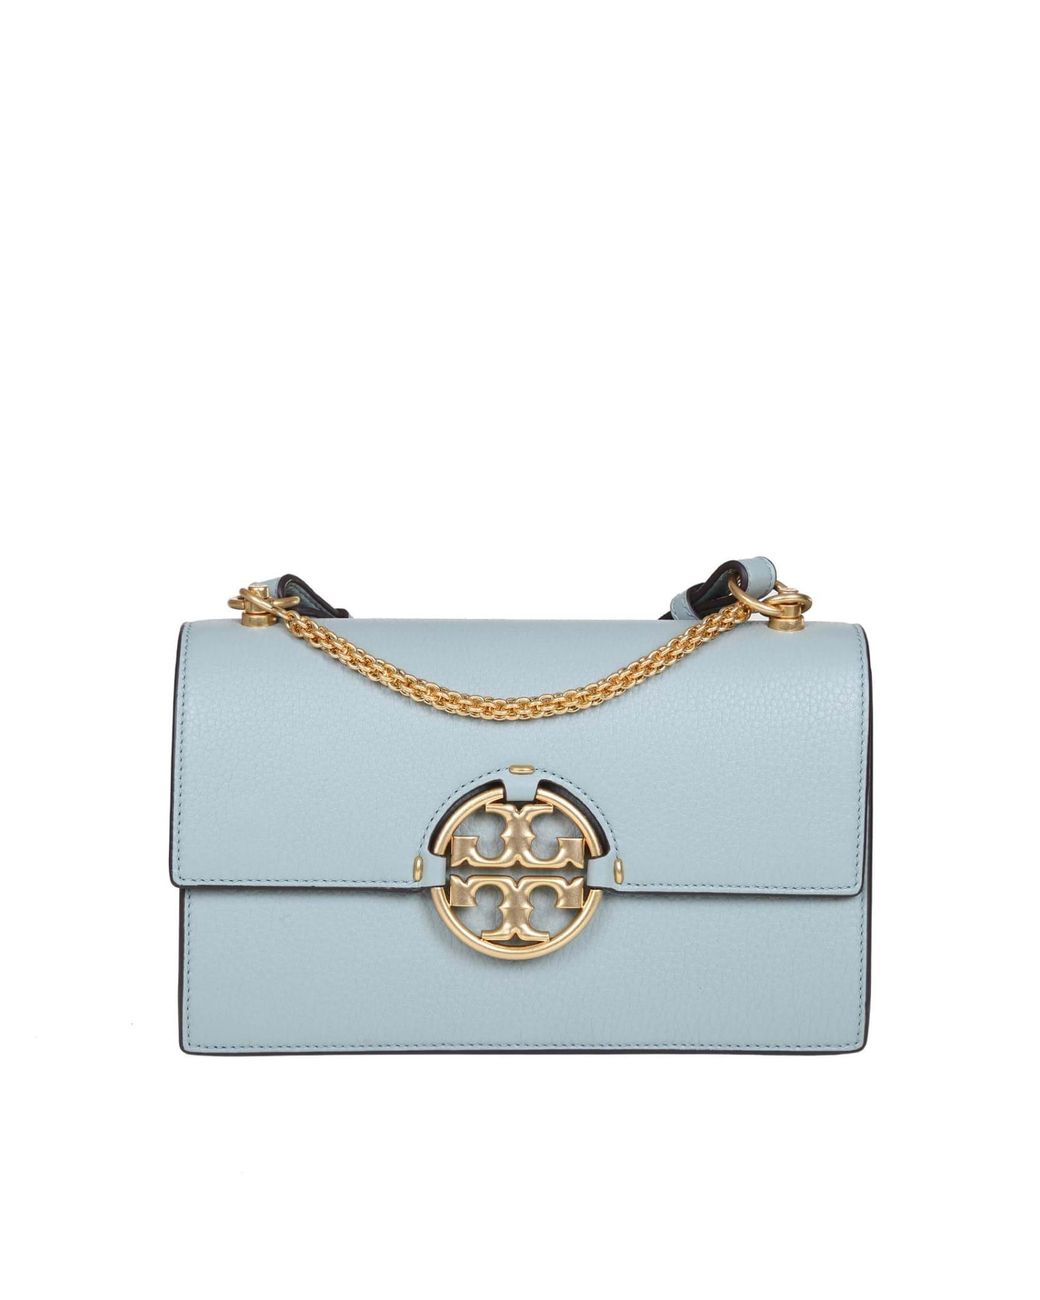 🛍🛍Tory Burch- Eleanor Small Convertible Shoulder Bag, “Blue Celadon”, Gold